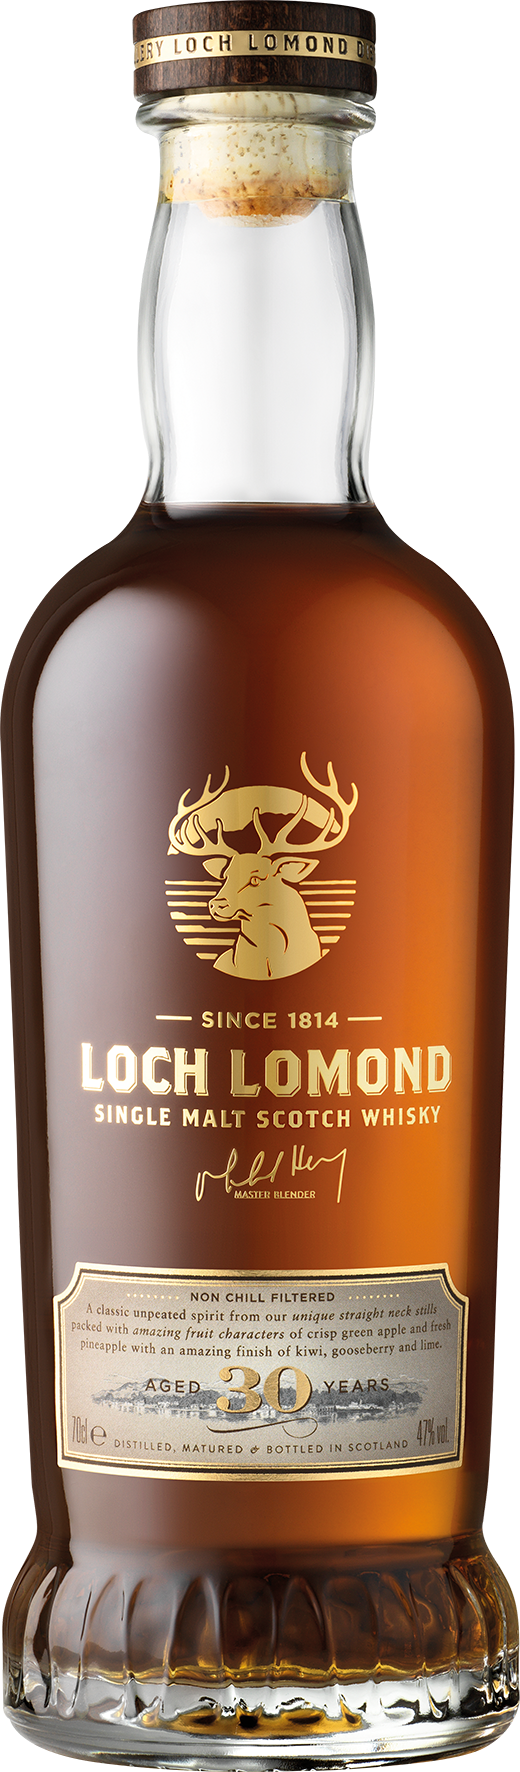 Single Malt Scotch Whisky Aged 30 Years